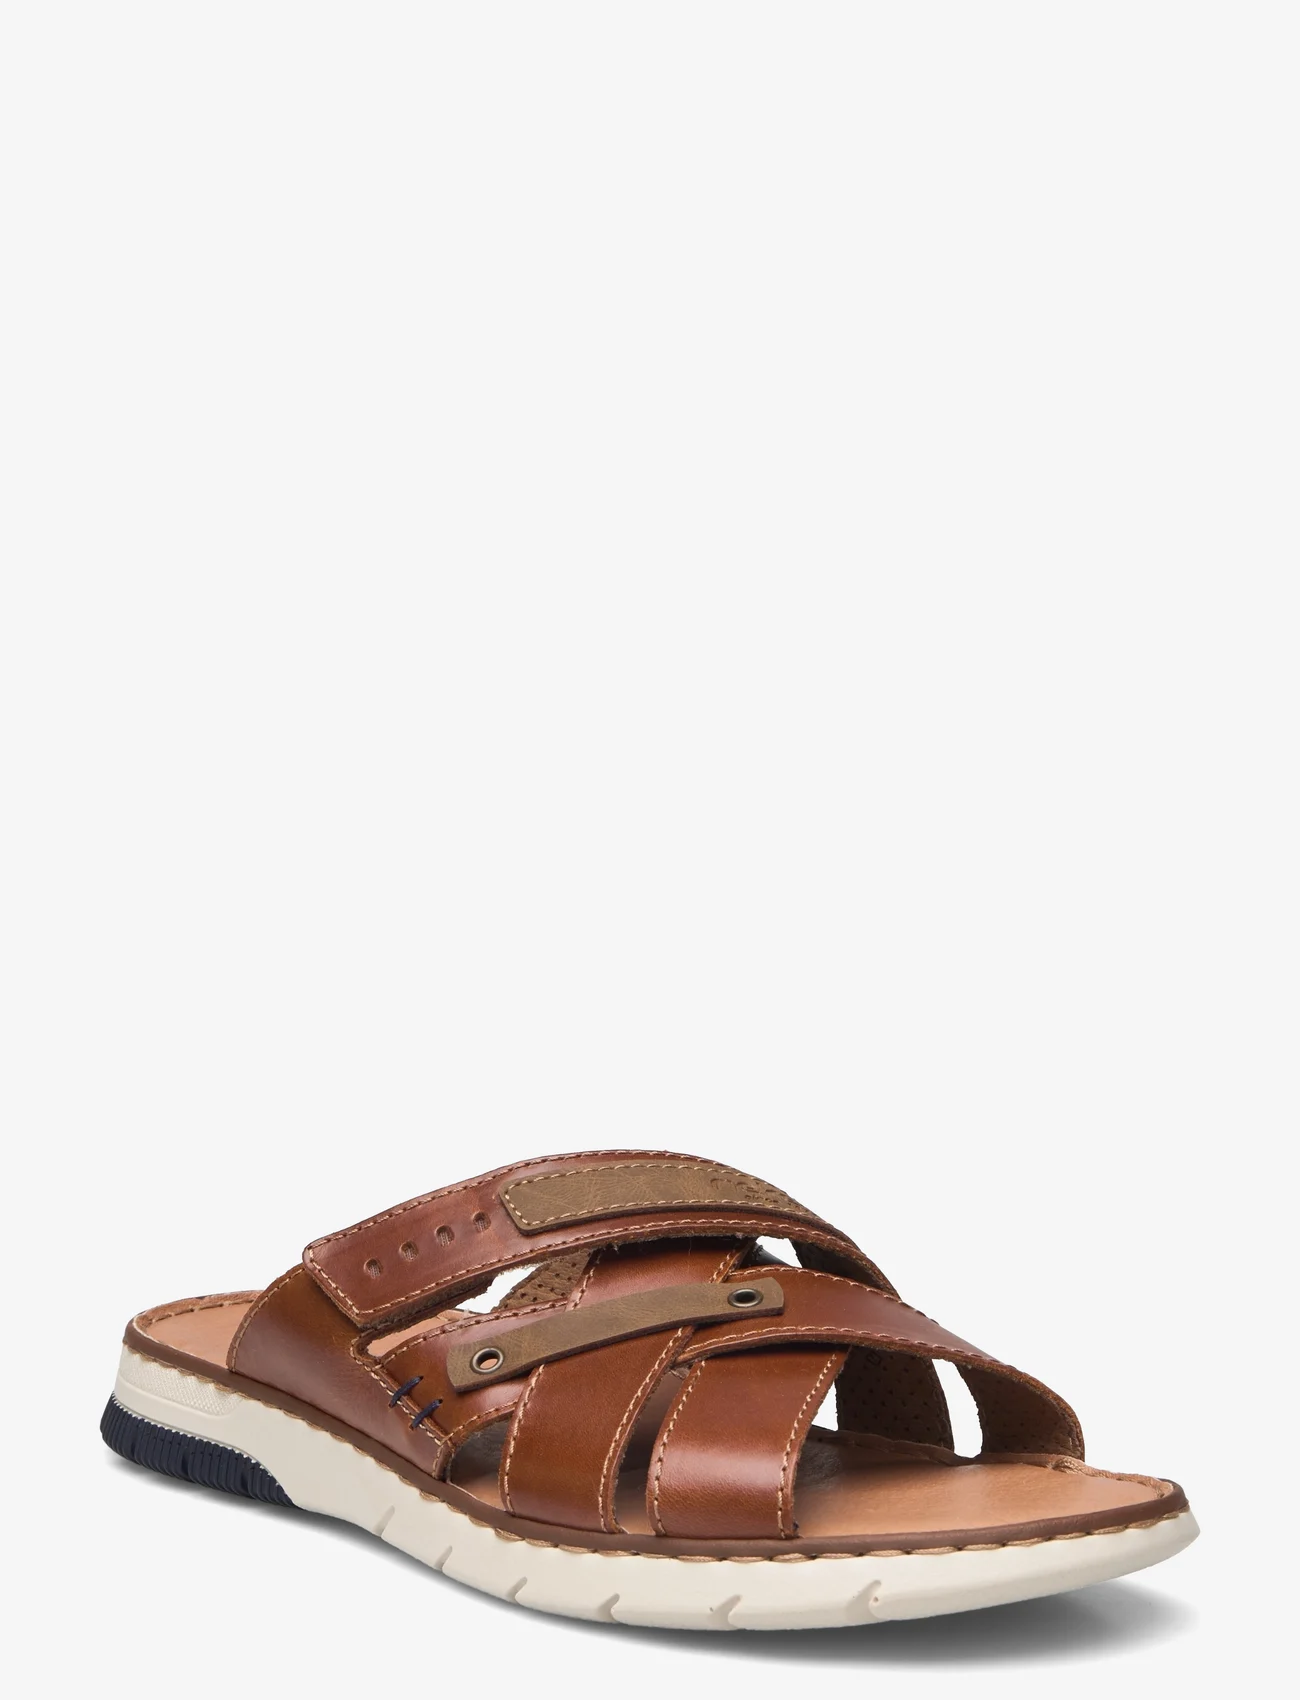 Rieker - 25292-24 - sandals - brown - 0